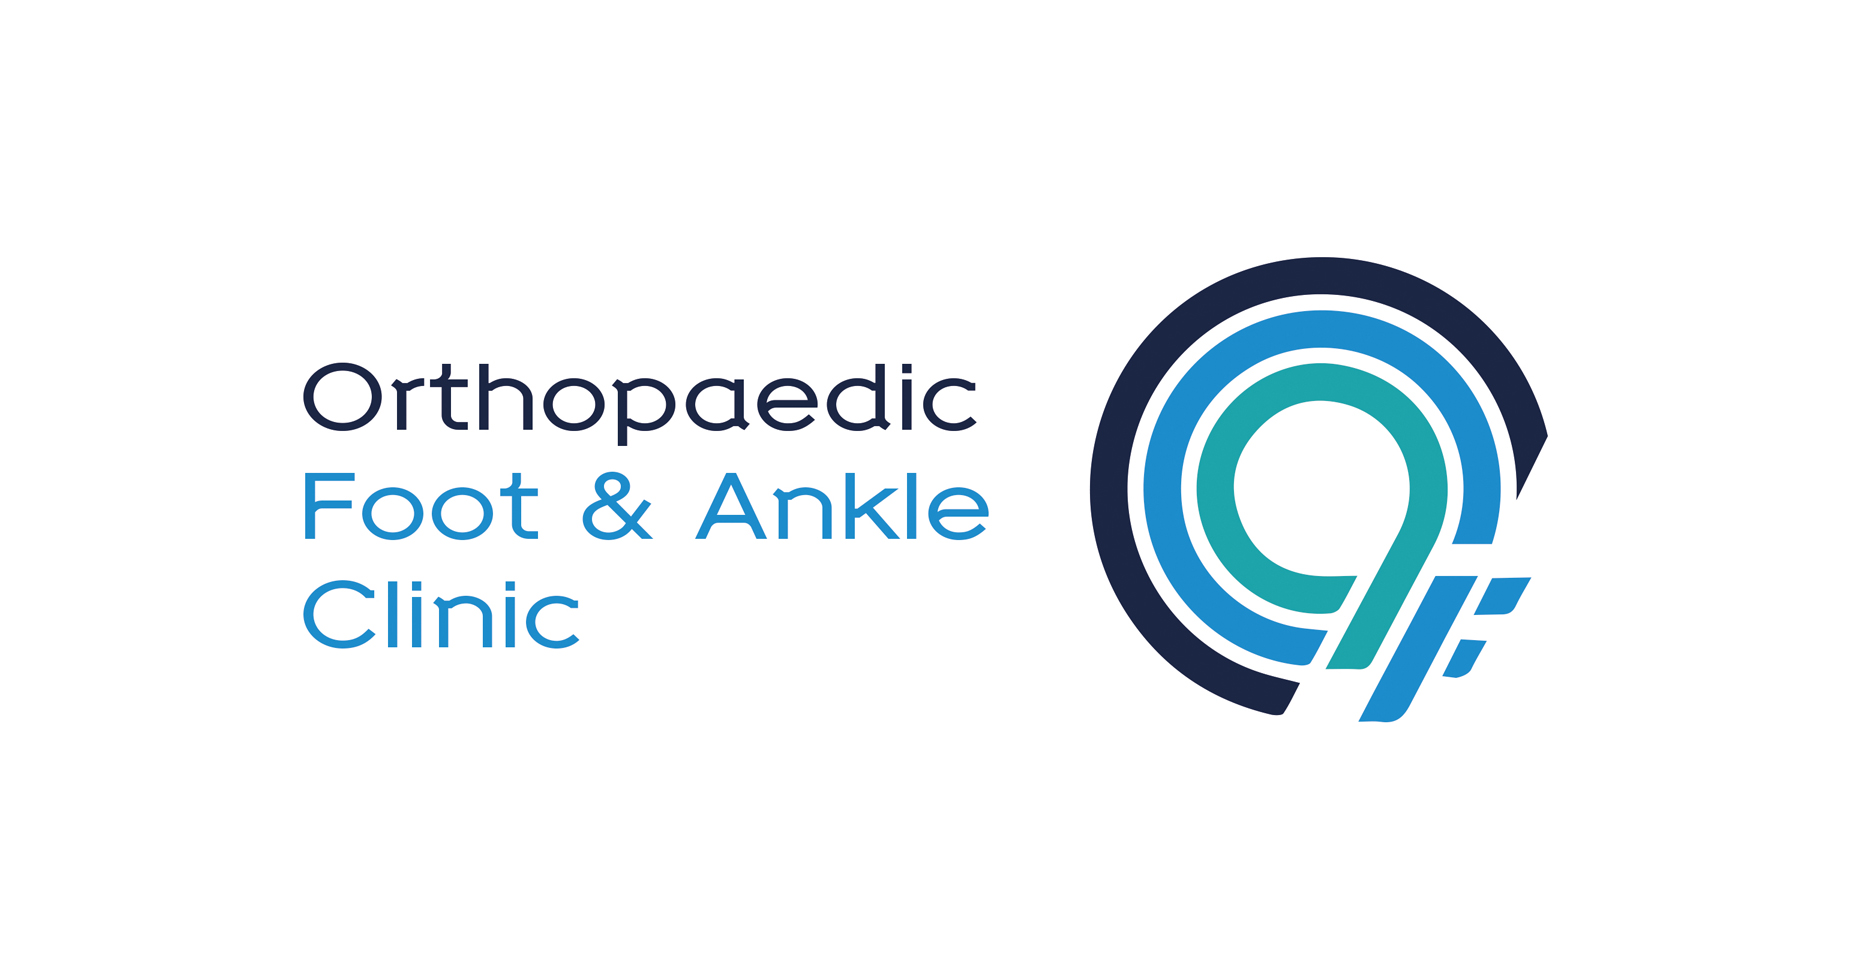 Orthopaedic Foot & Ankle Clinic - Jay Flaxman StudioJay Flaxman Studio ...